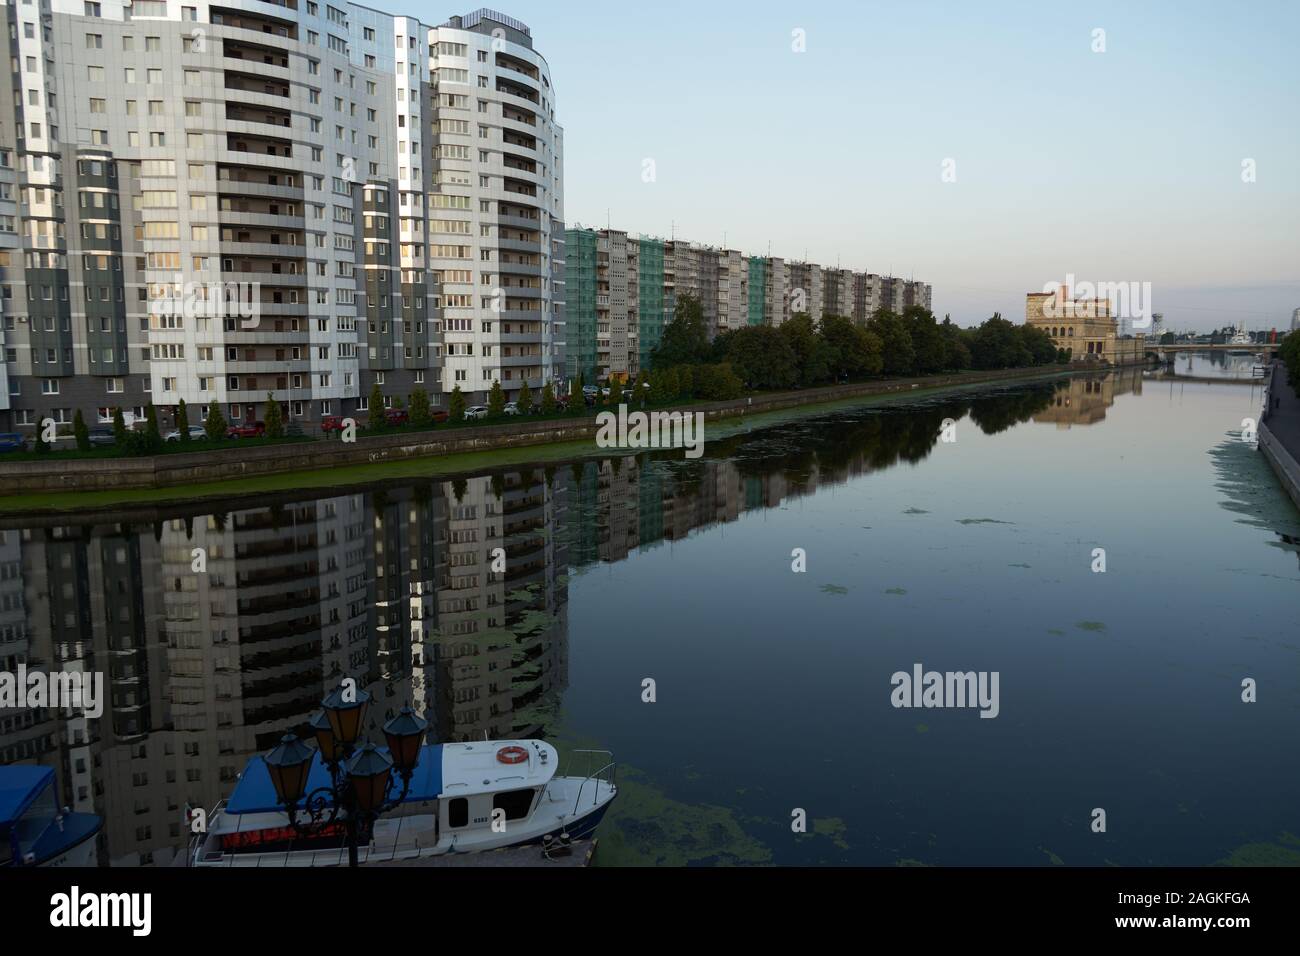 Wohnhäuser am Pregelufer, gegenüber Fischdorf, Pregel, Pregolja, Kaliningrad, ehemaliges Königsberg, Oblast Kaliningrad, Russland Stock Photo